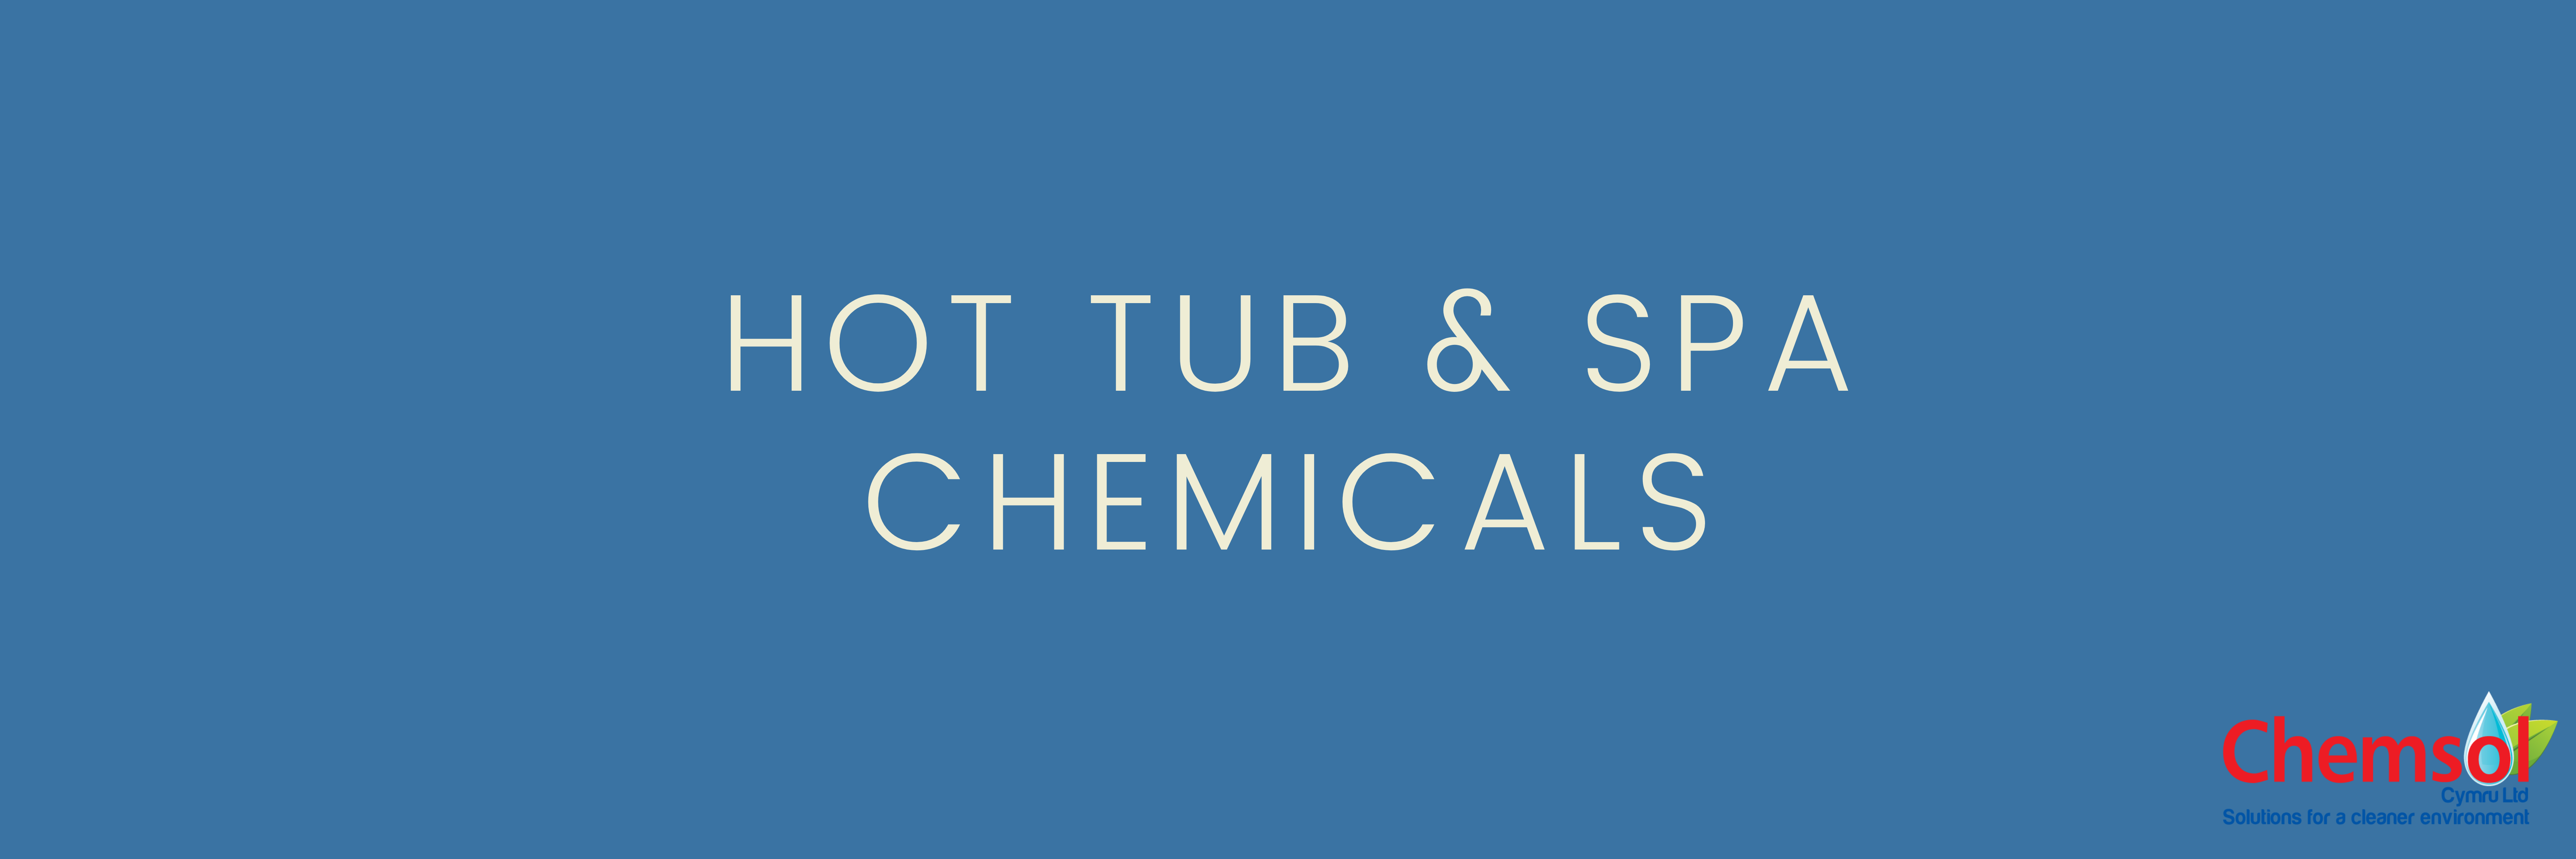 Hot tub & Spa Chemicals